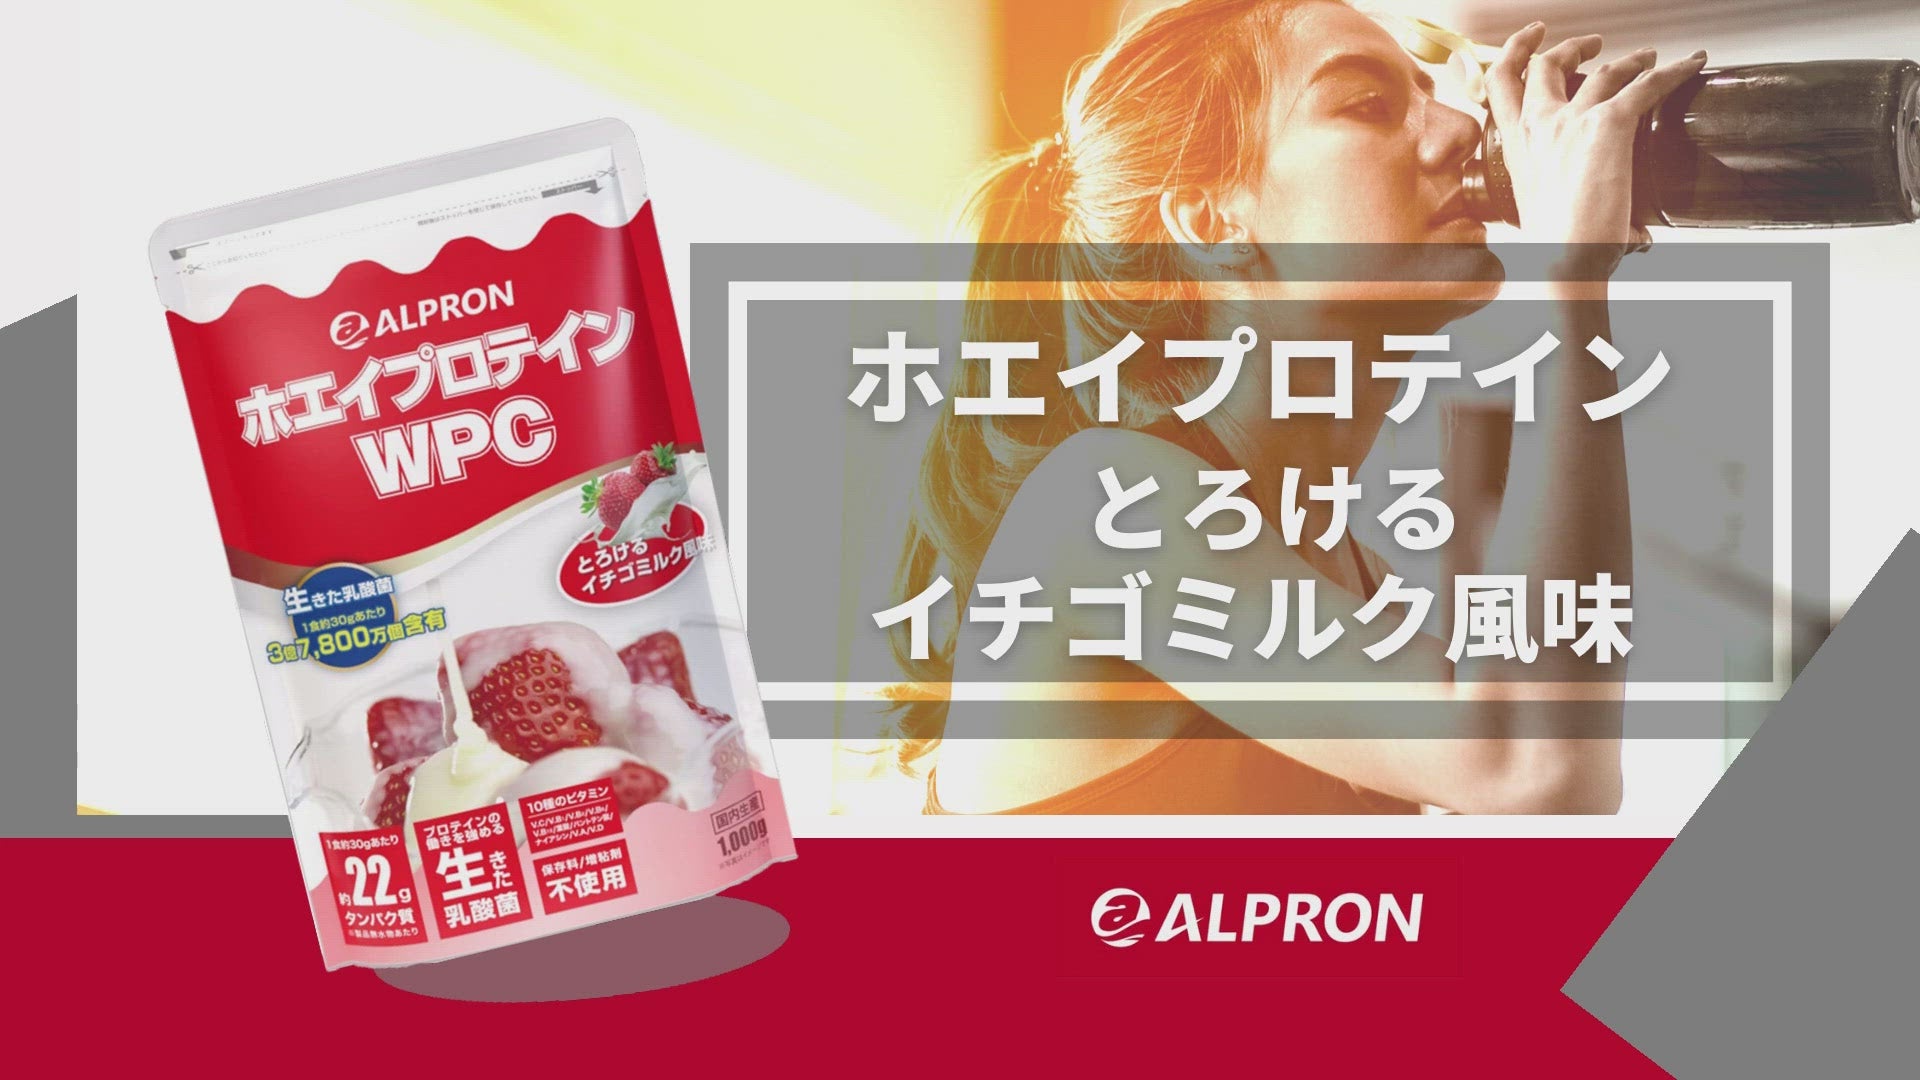 WEB限定】ALPRON WPC プロテイン (1kg/3kg) – アルプロン公式ショップ